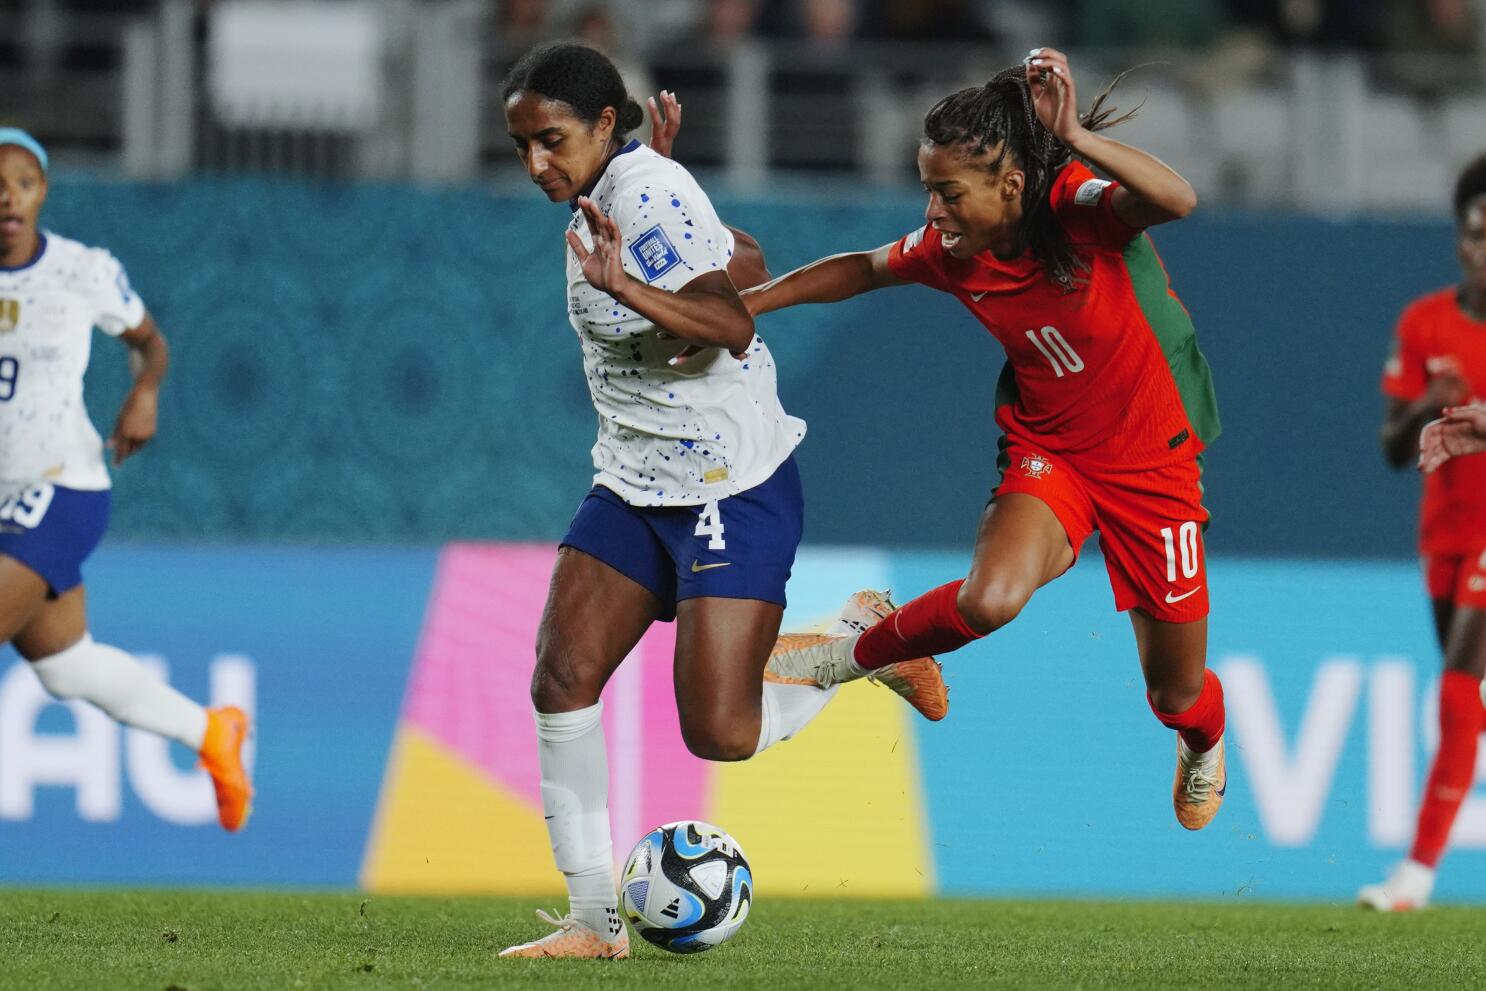 U.S. U-23 Women's Youth National Team earns 2-0 win over France